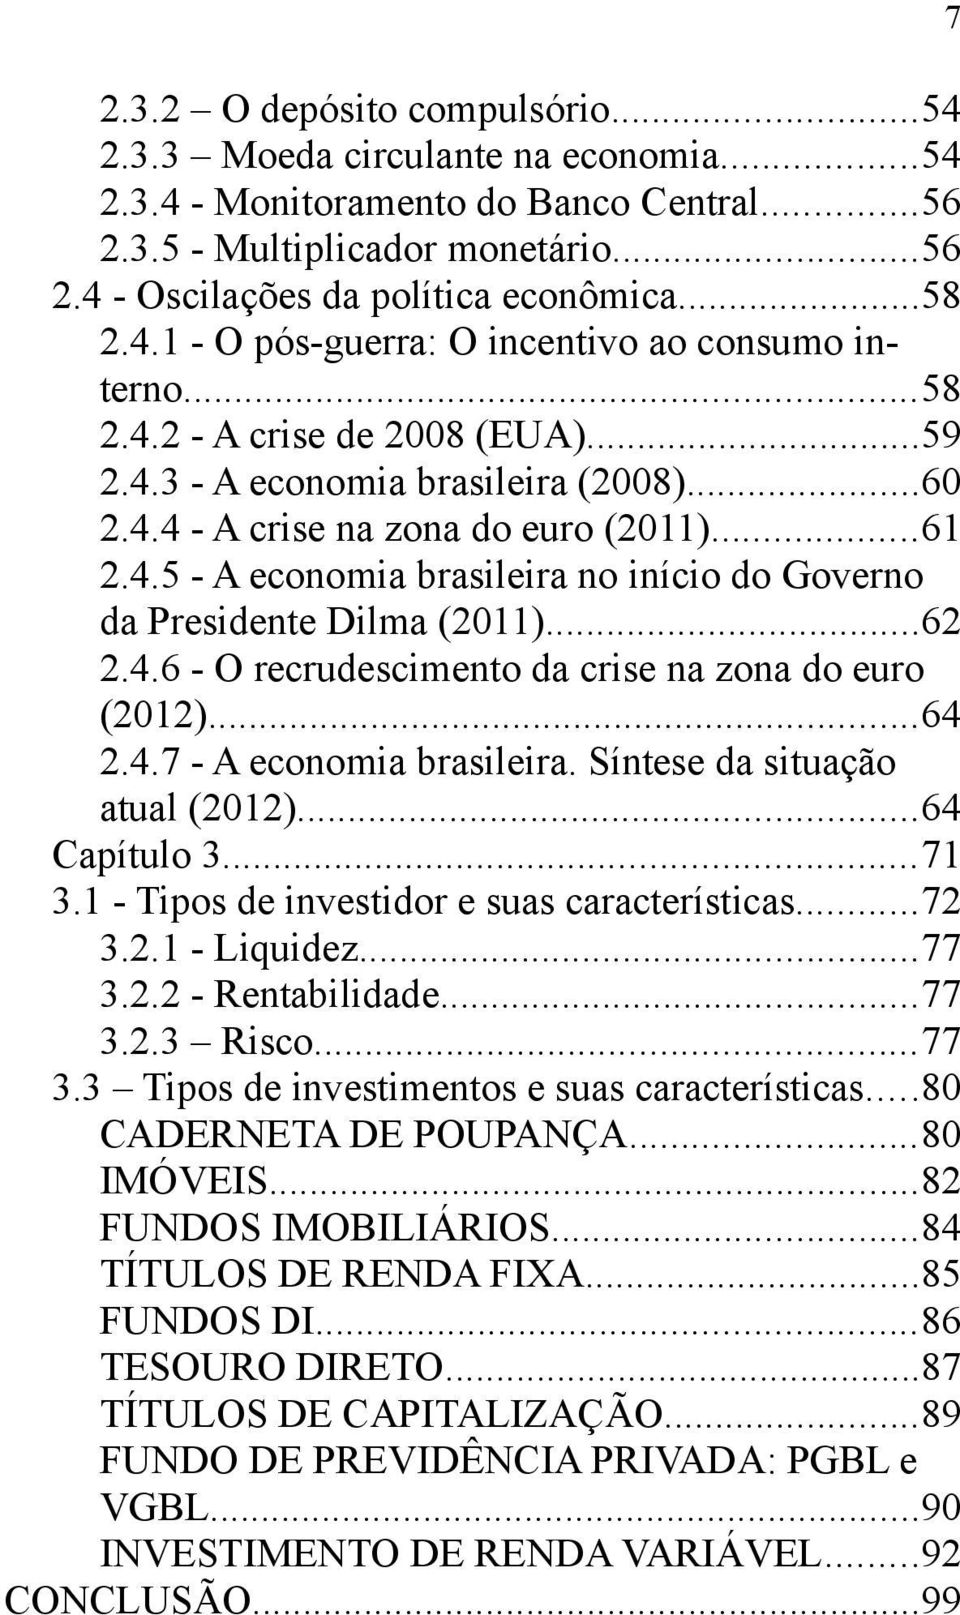 ..62 2.4.6 - O recrudescimento da crise na zona do euro (2012)...64 2.4.7 - A economia brasileira. Síntese da situação atual (2012)...64 Capítulo 3...71 3.